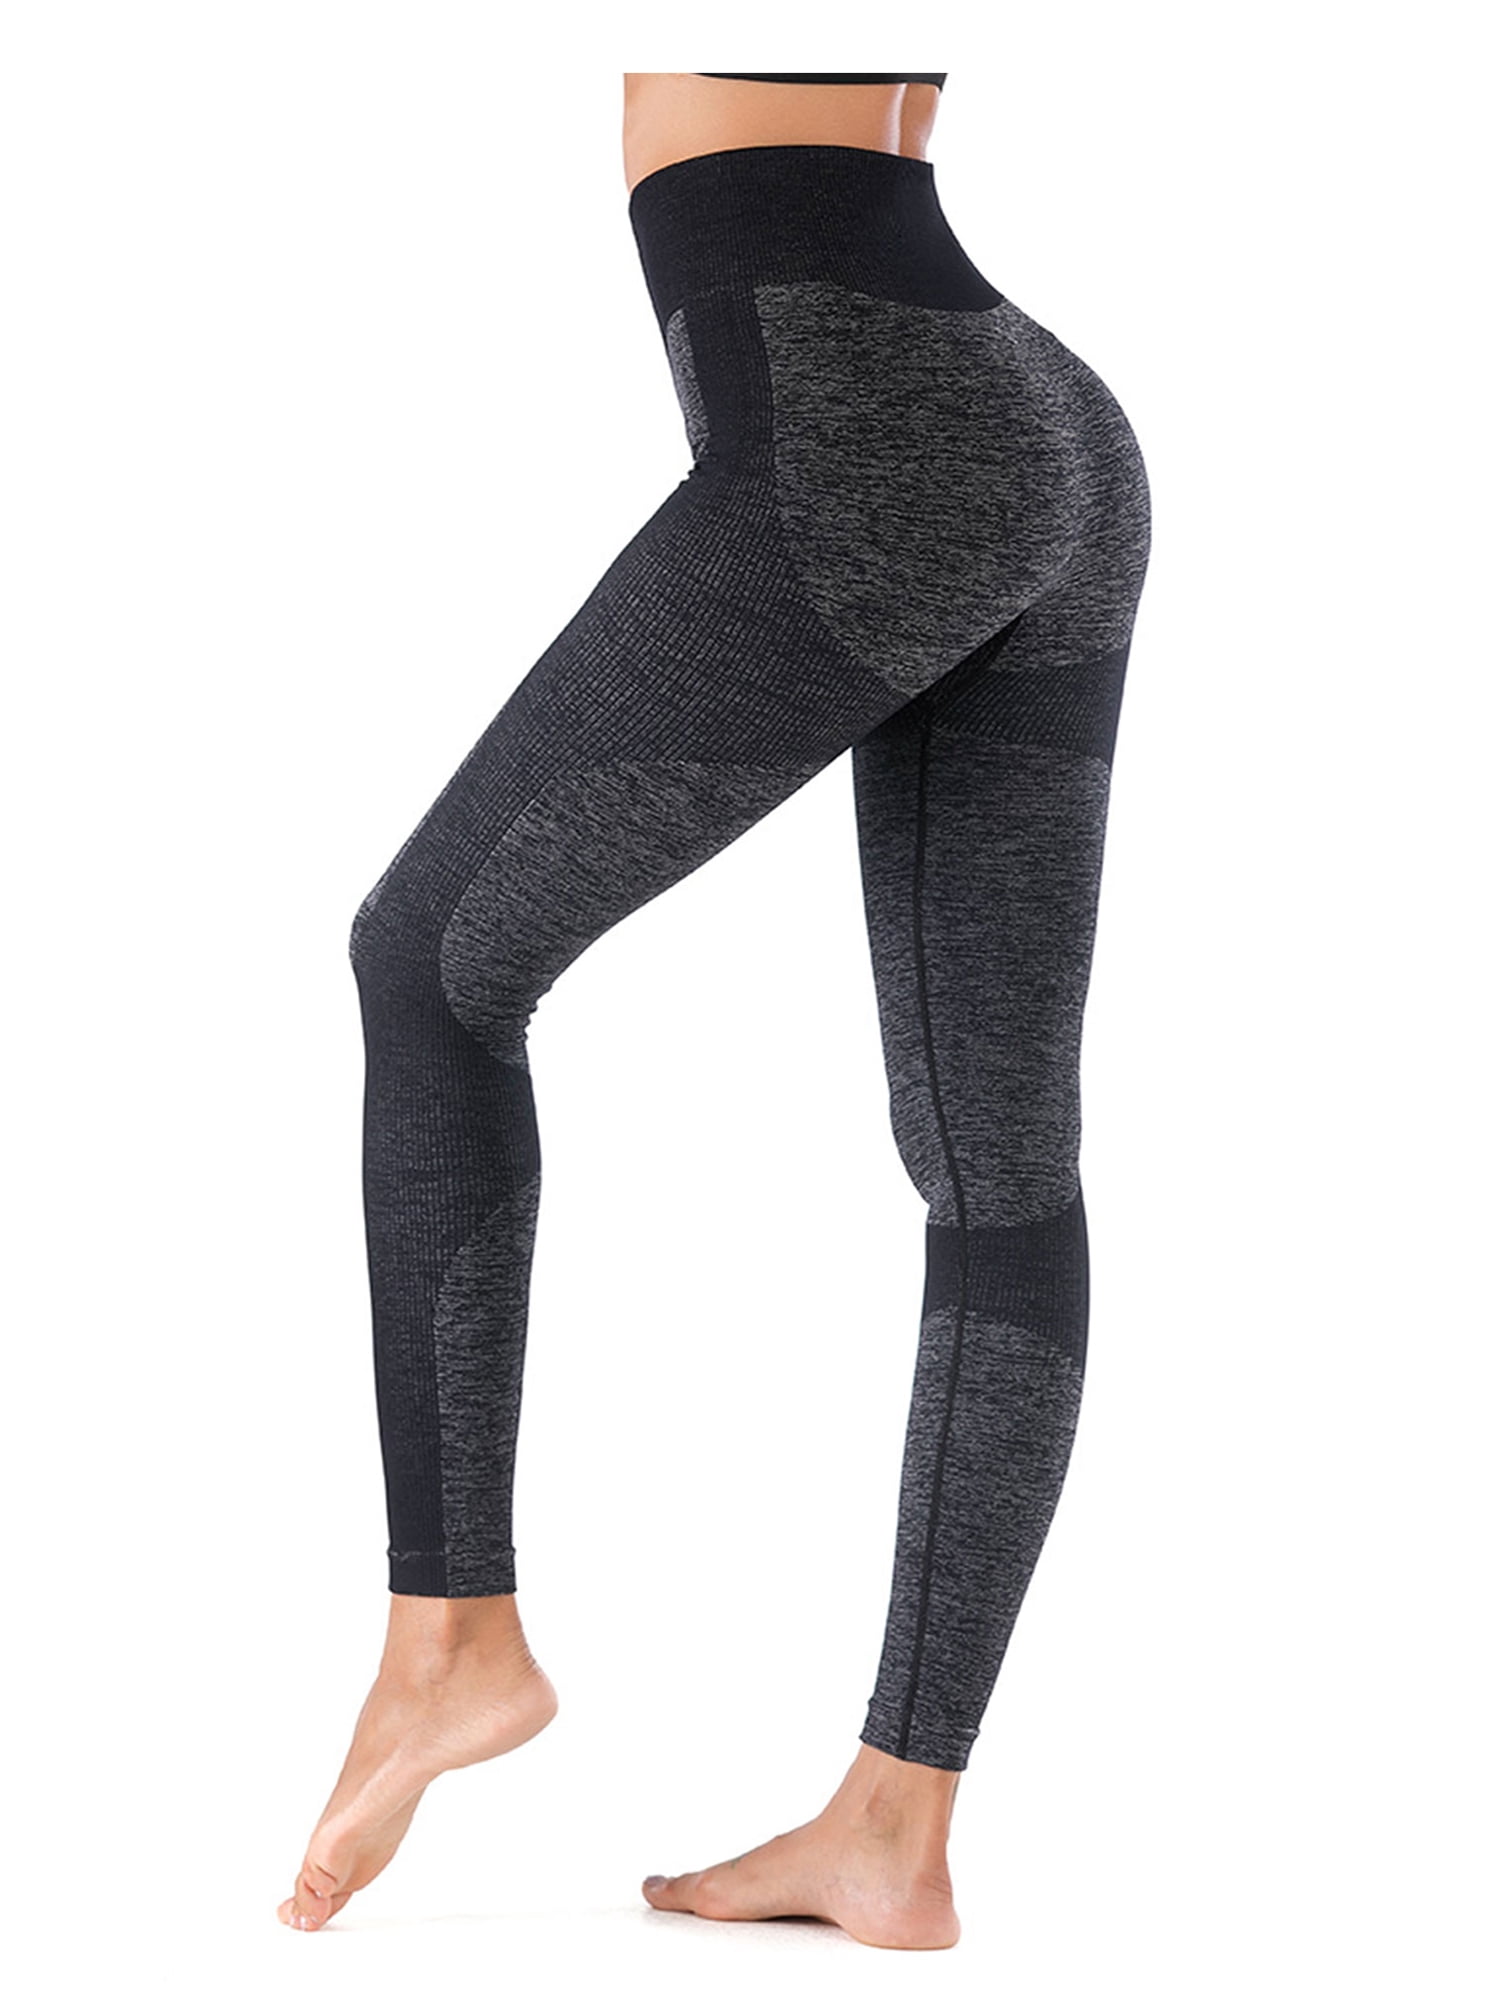 Youloveit Women Sport Leggings High Waist Yoga Pants Gym Tight